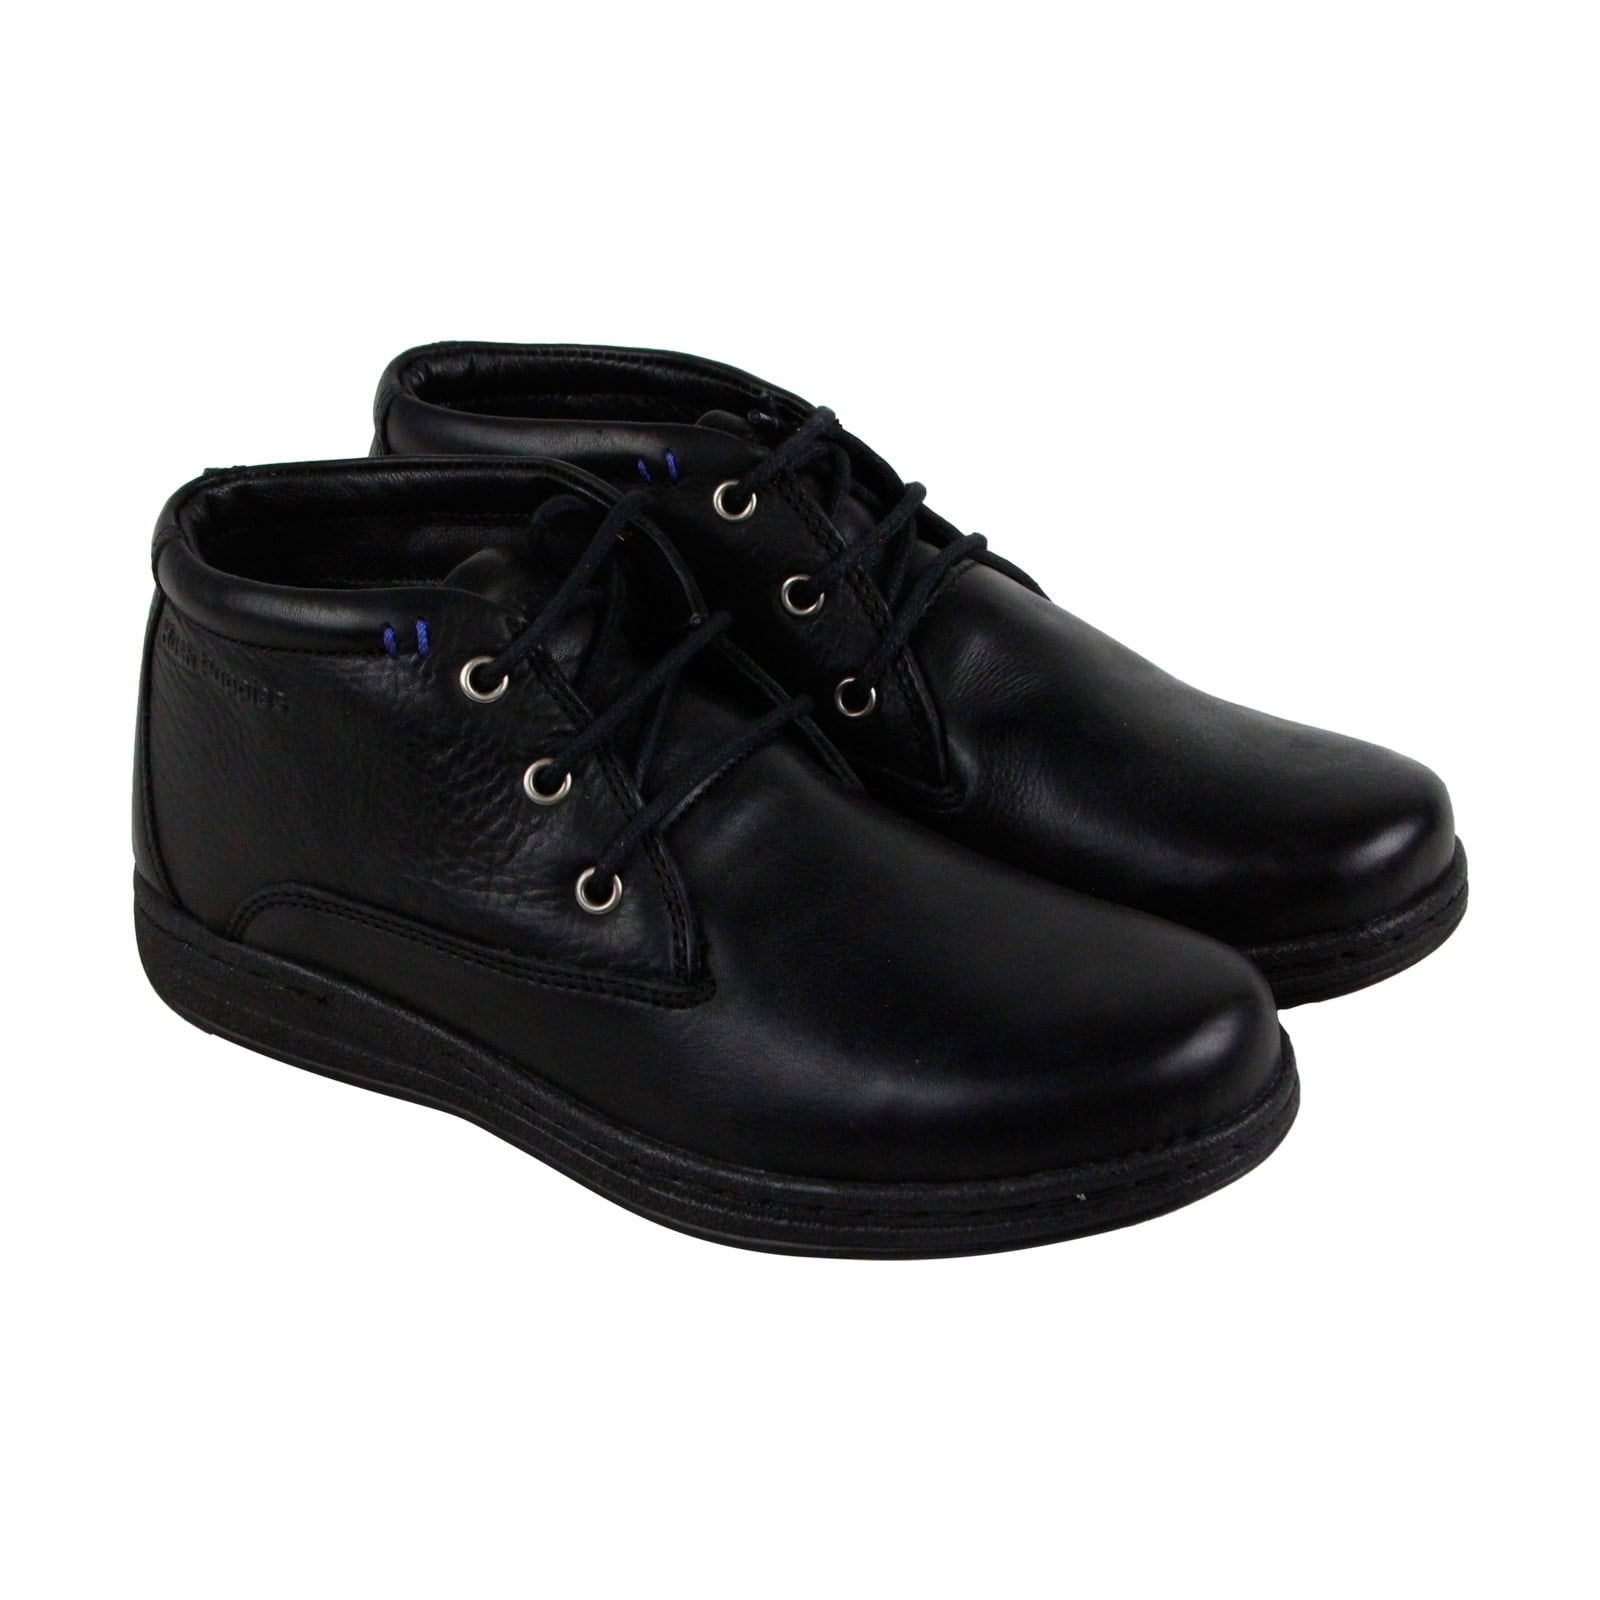 hush puppies men's black leather casual shoe